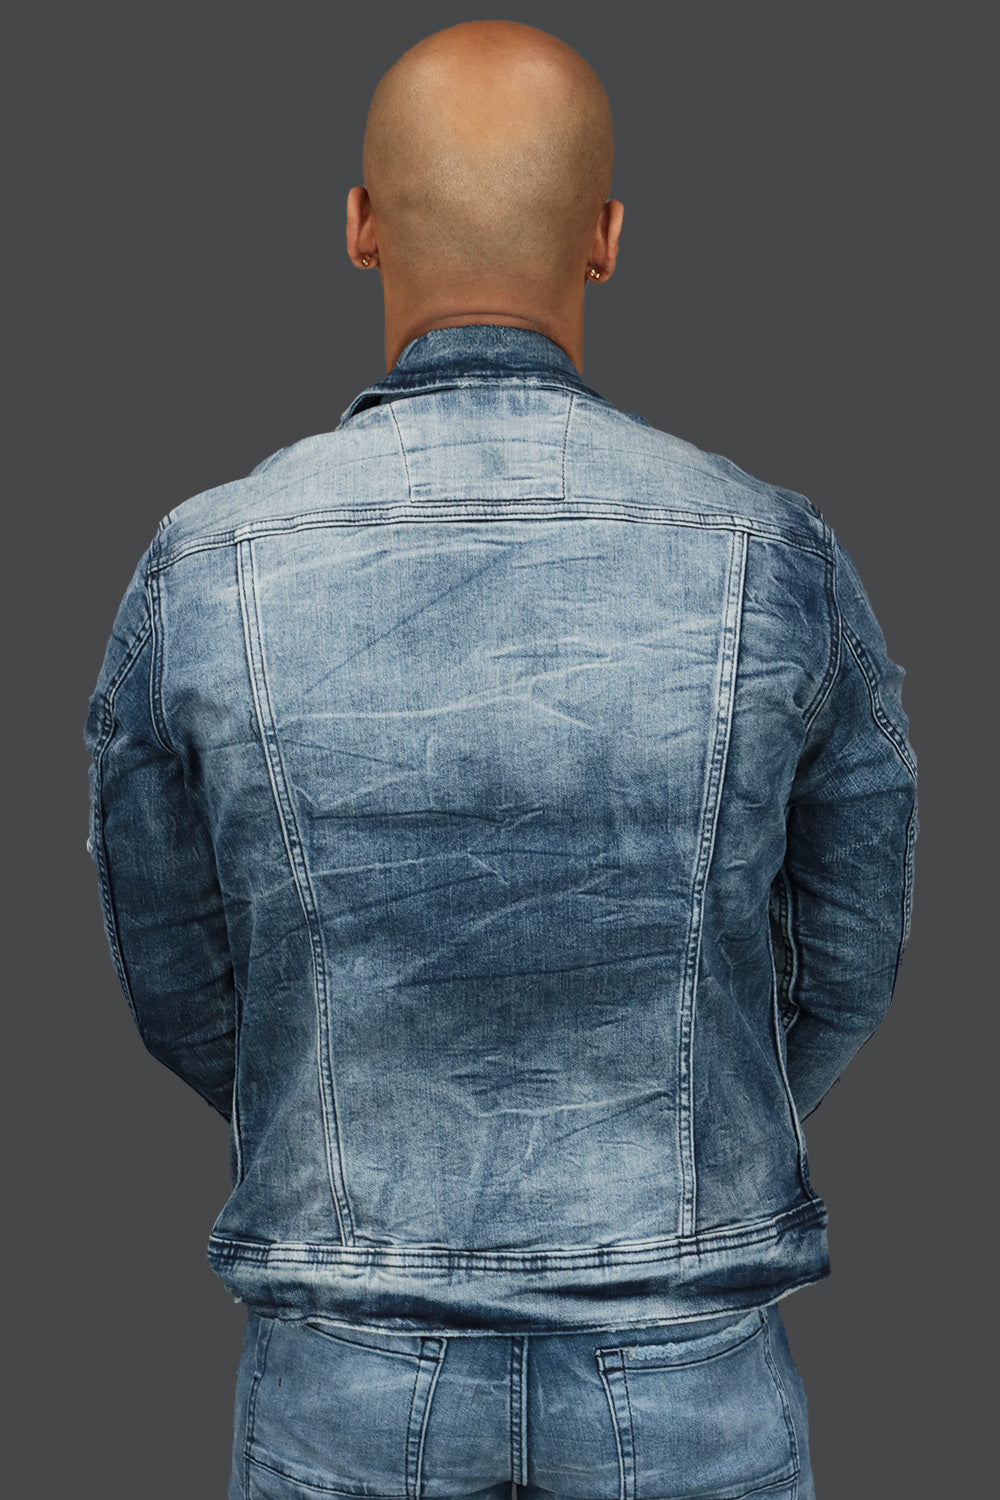 The backside of the Deep Blue Distressed Denim Jacket | Jordan Craig